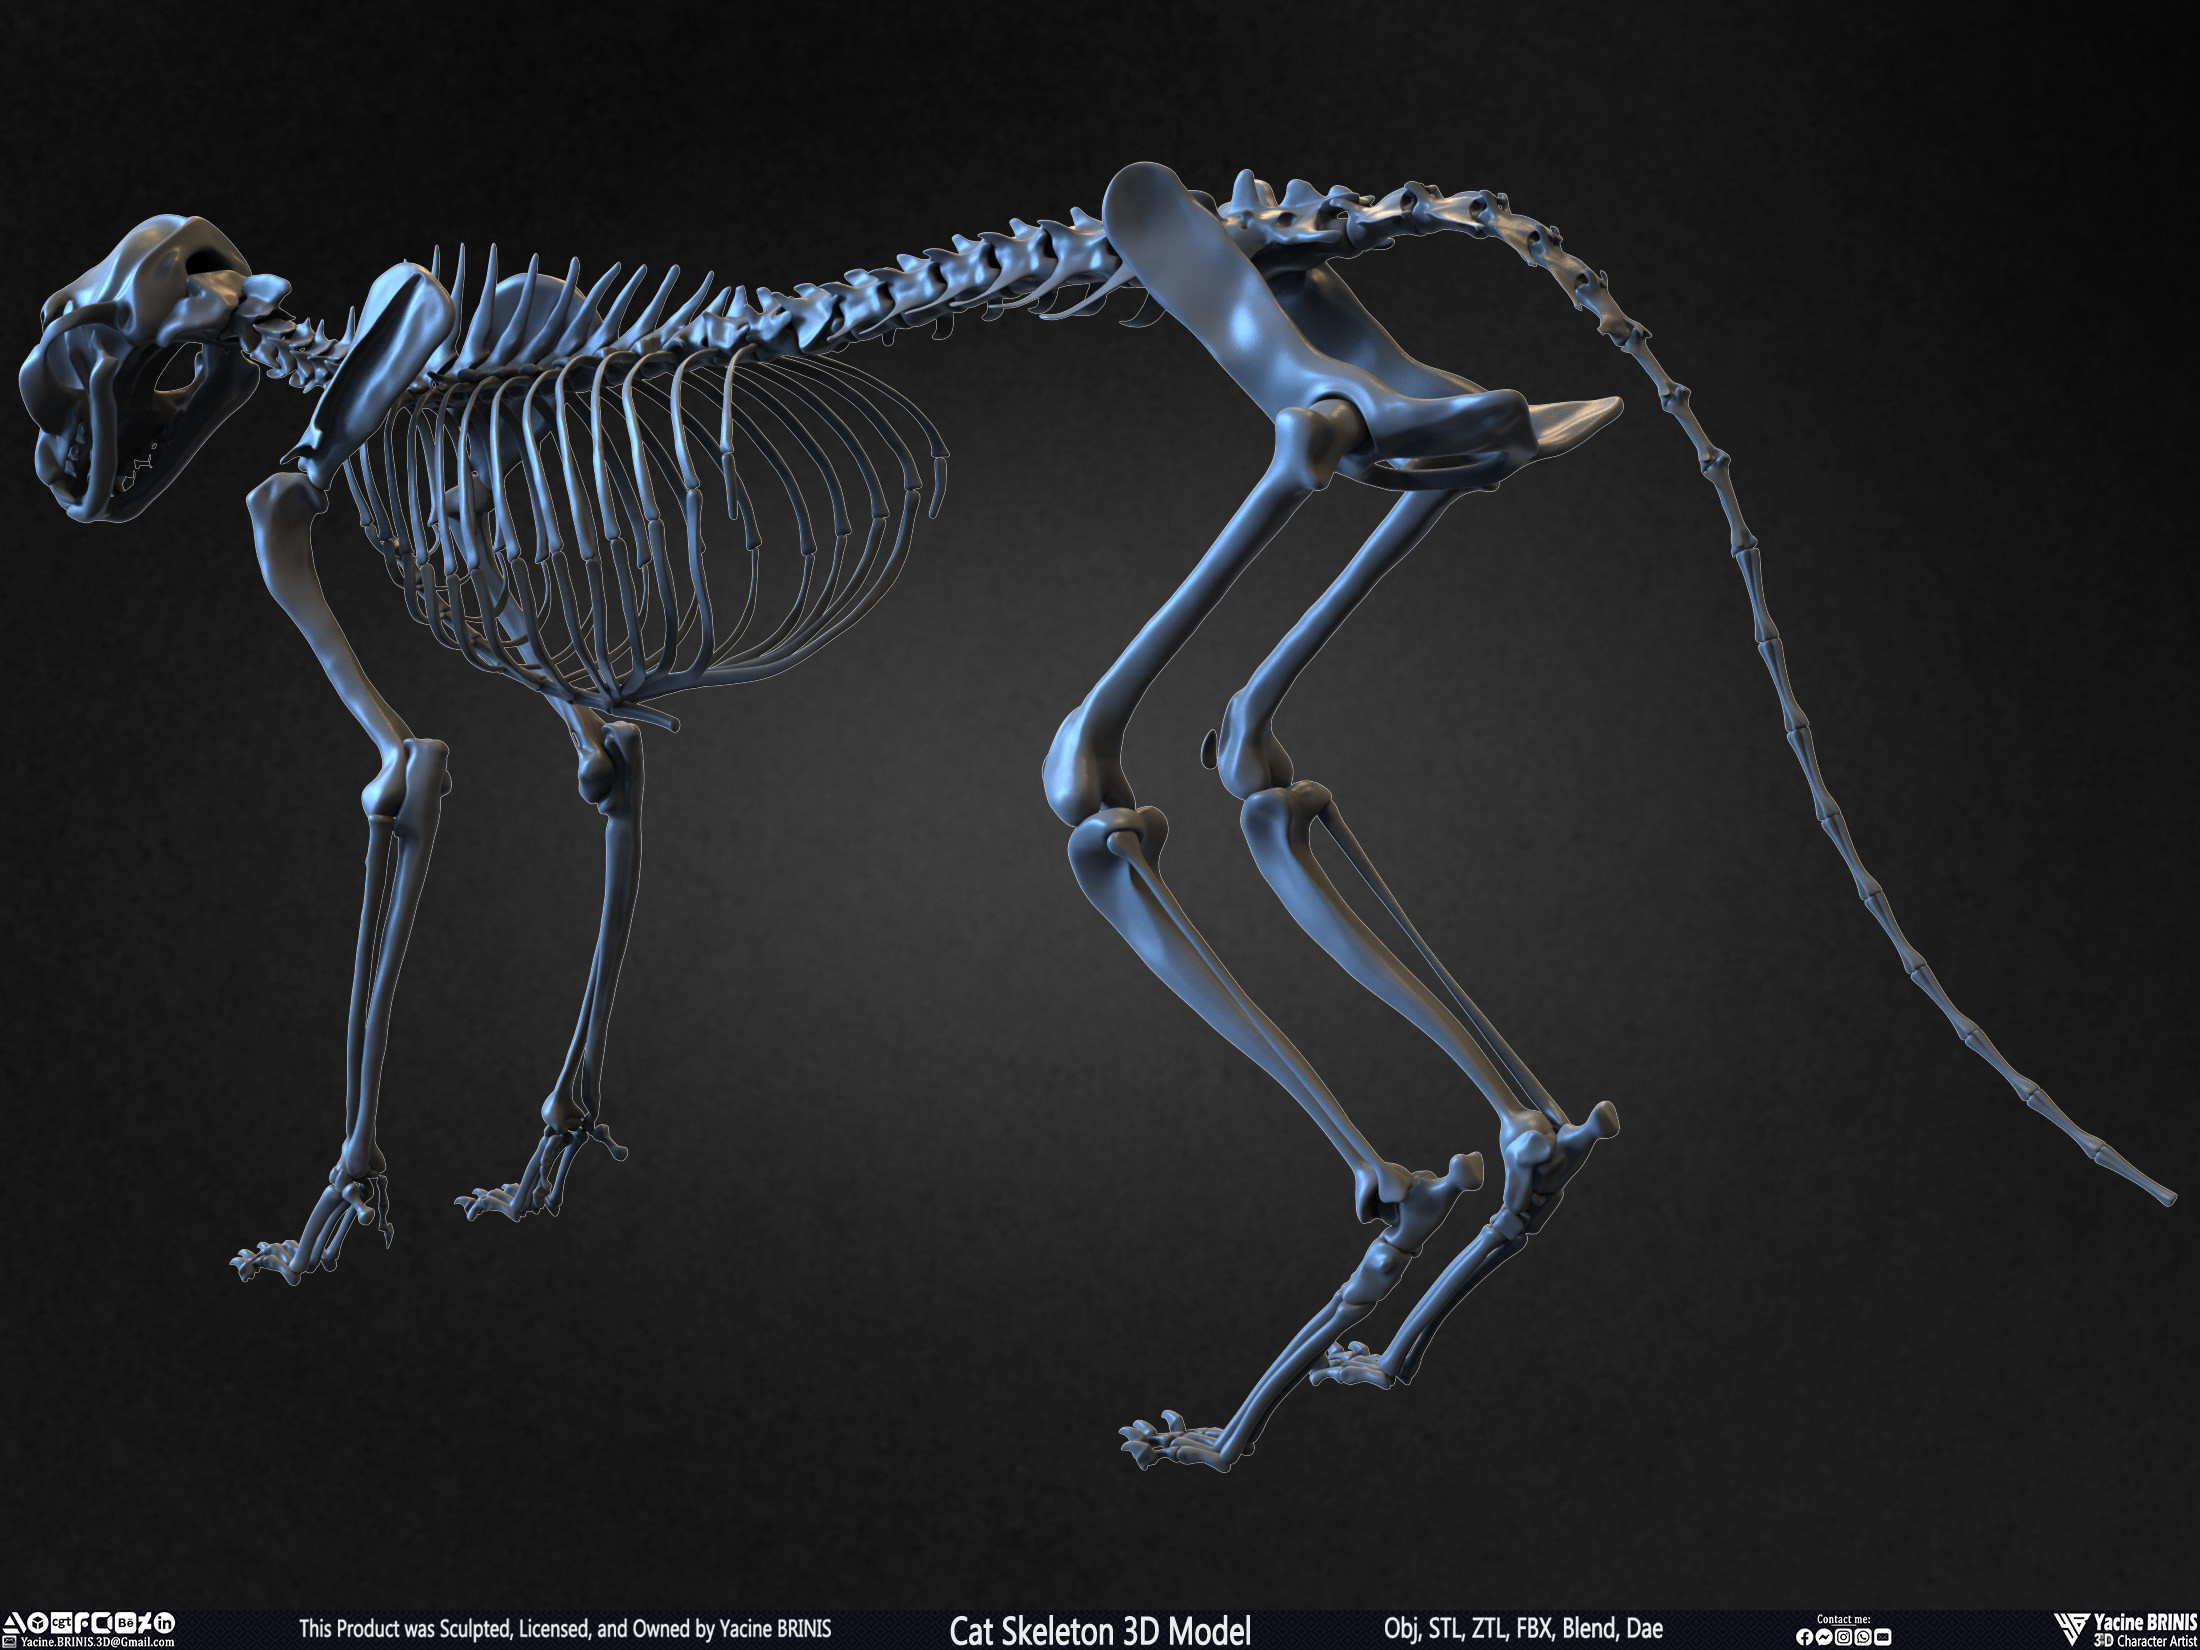 Highly Detailed Cat Skeleton 3D Model Sculpted by Yacine BRINIS Set 014